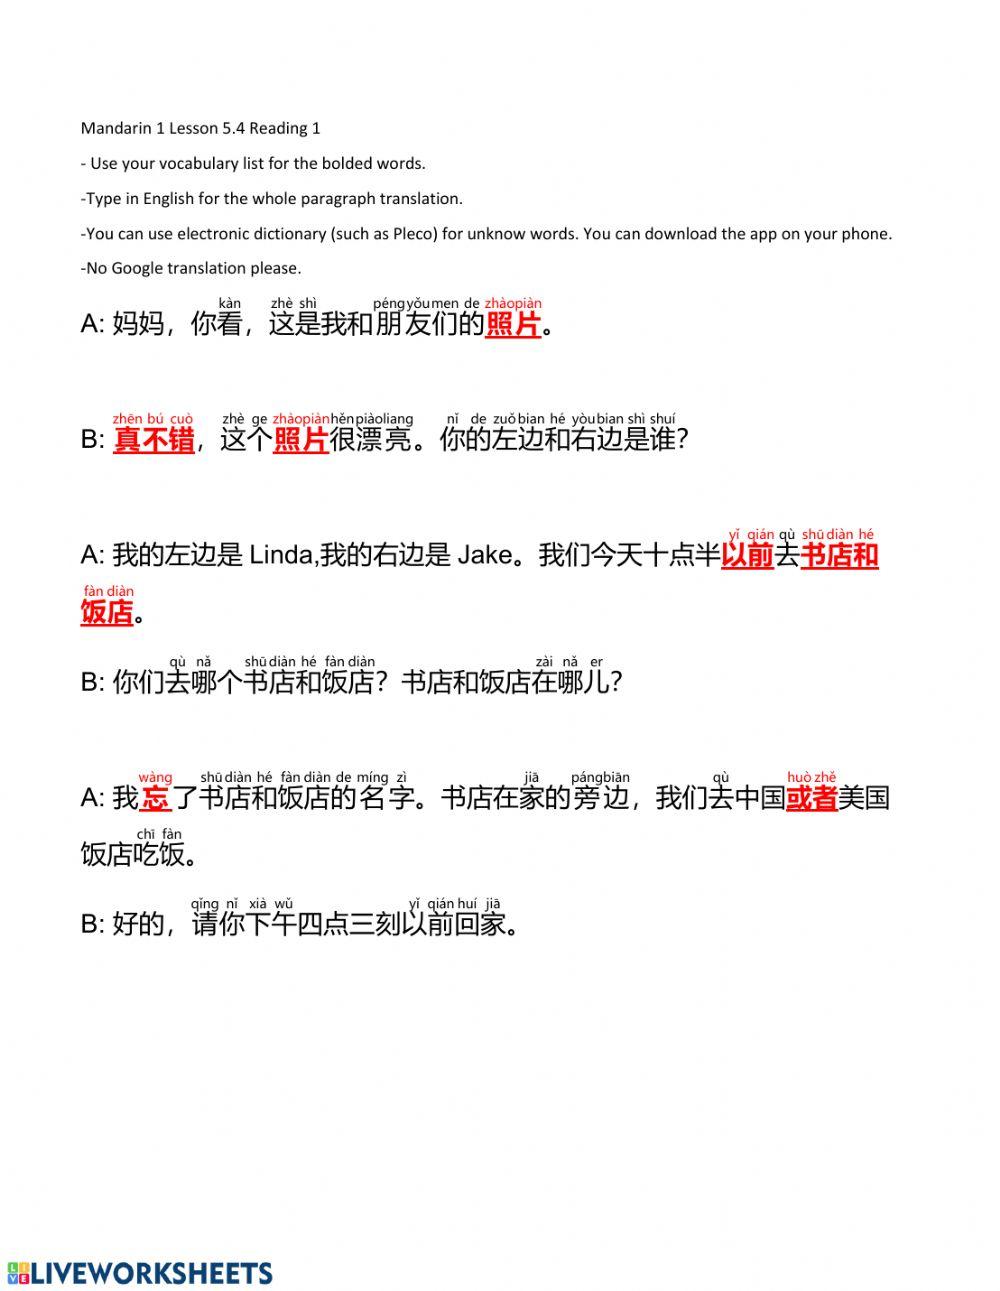 Mandarin 1 5.4 Reading Pinyin